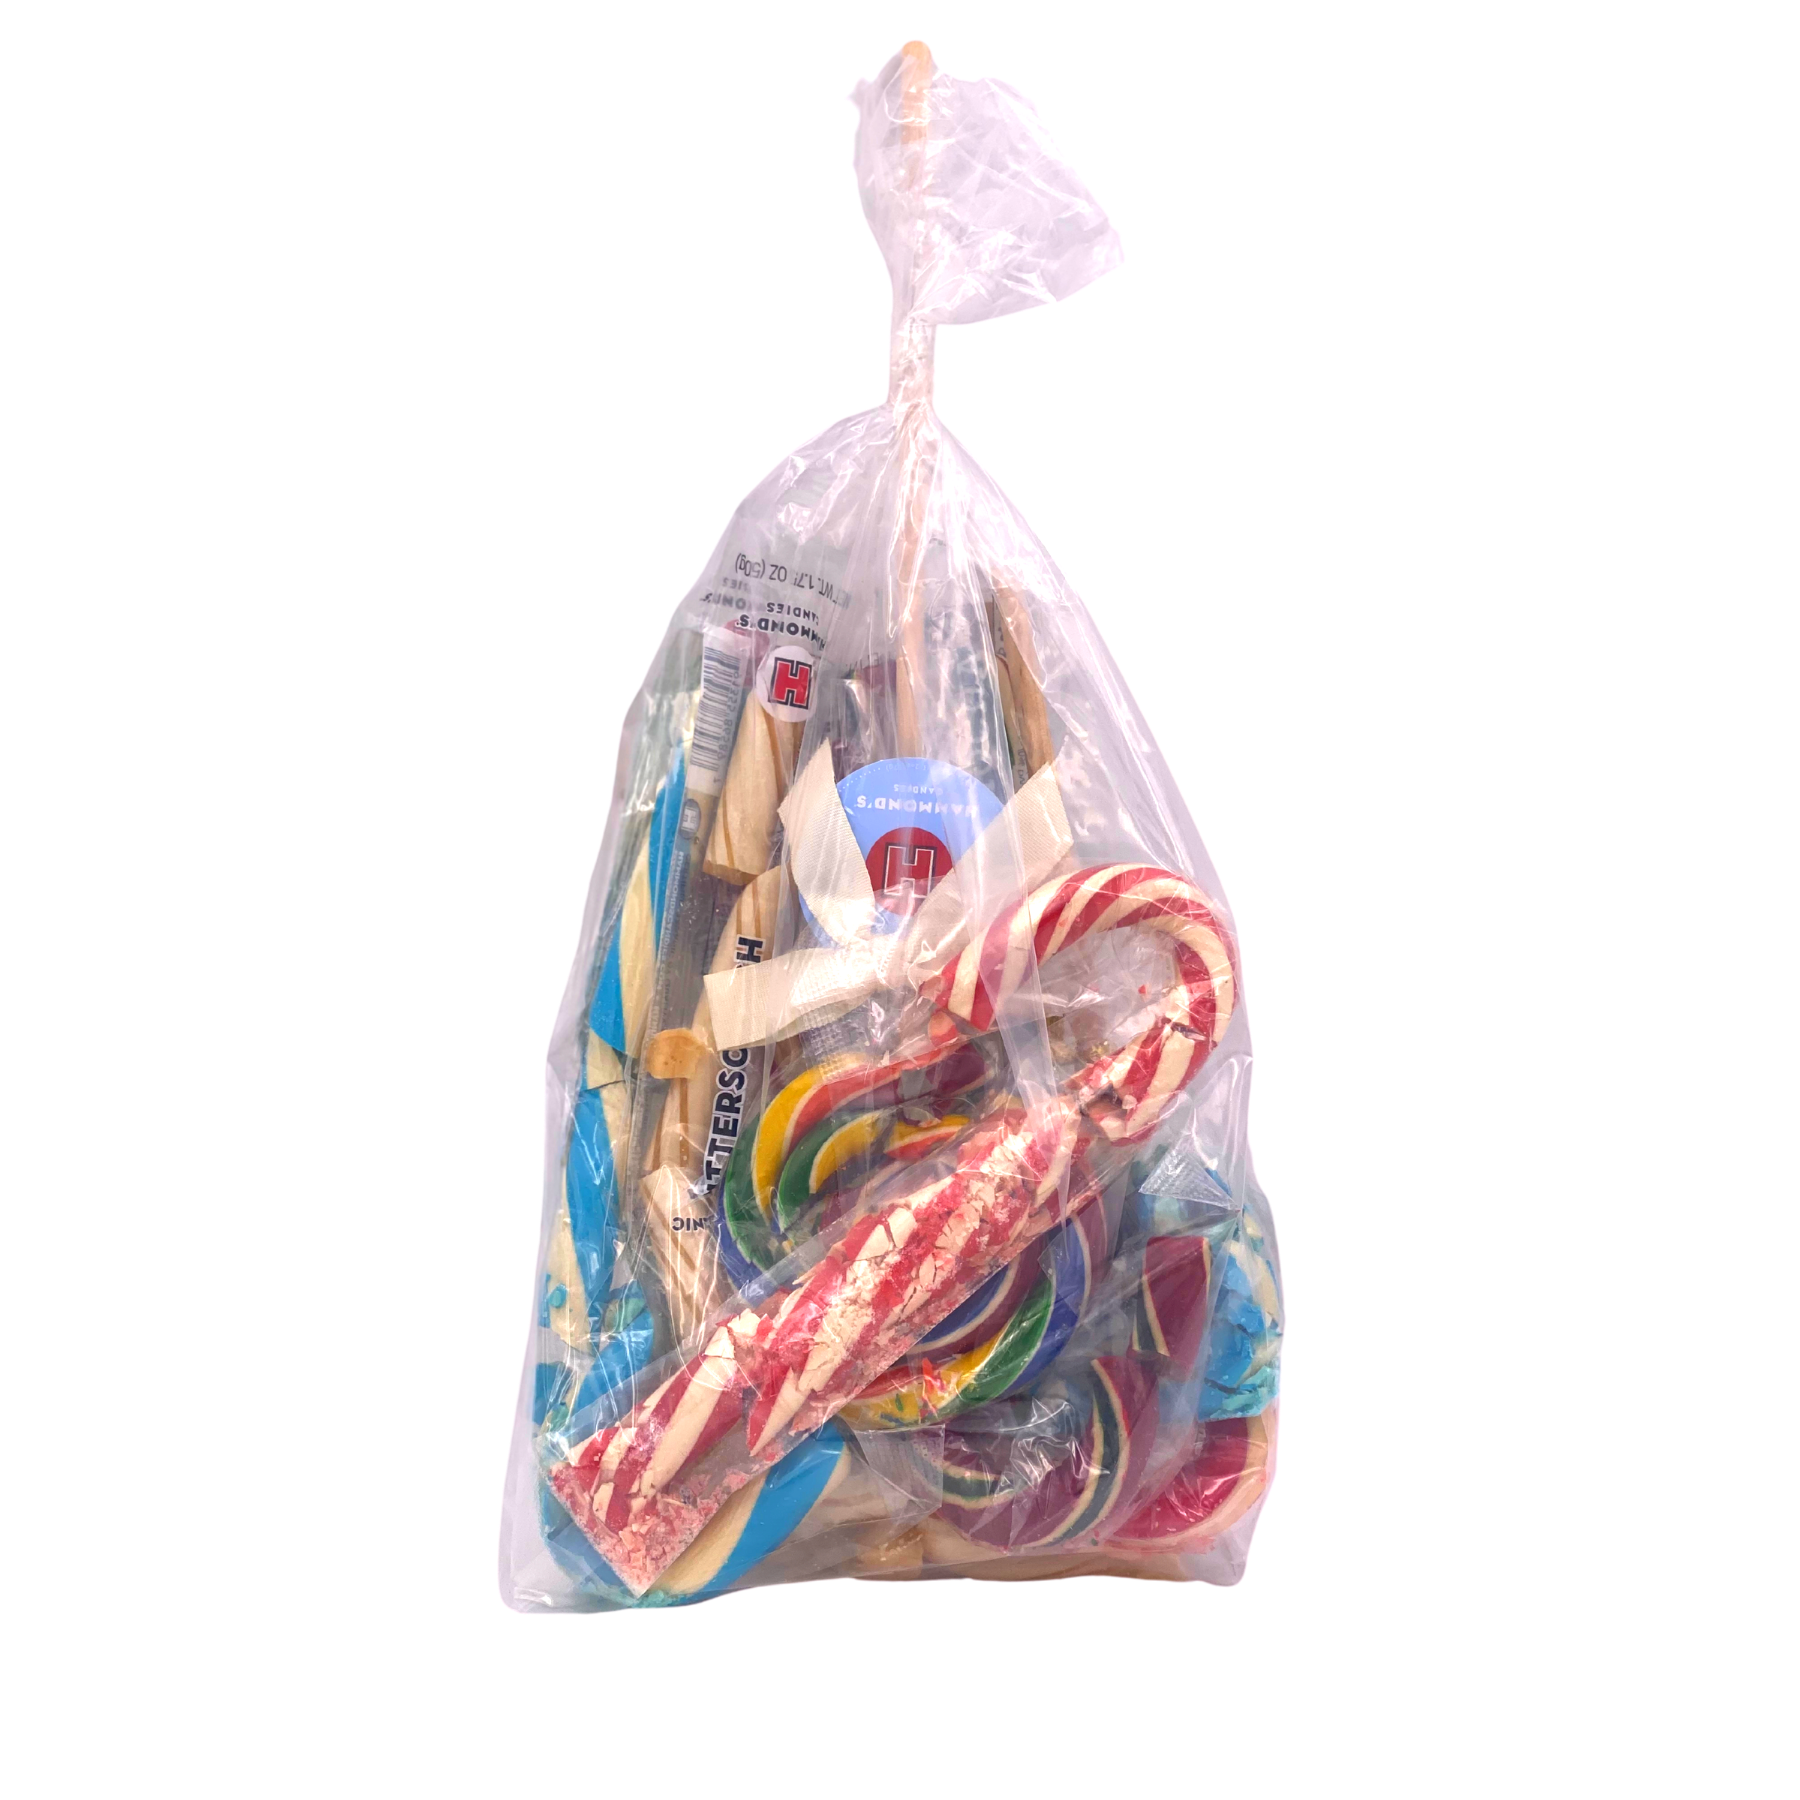 Oops! Broken Candy Cane and Lollipop Grab Bag